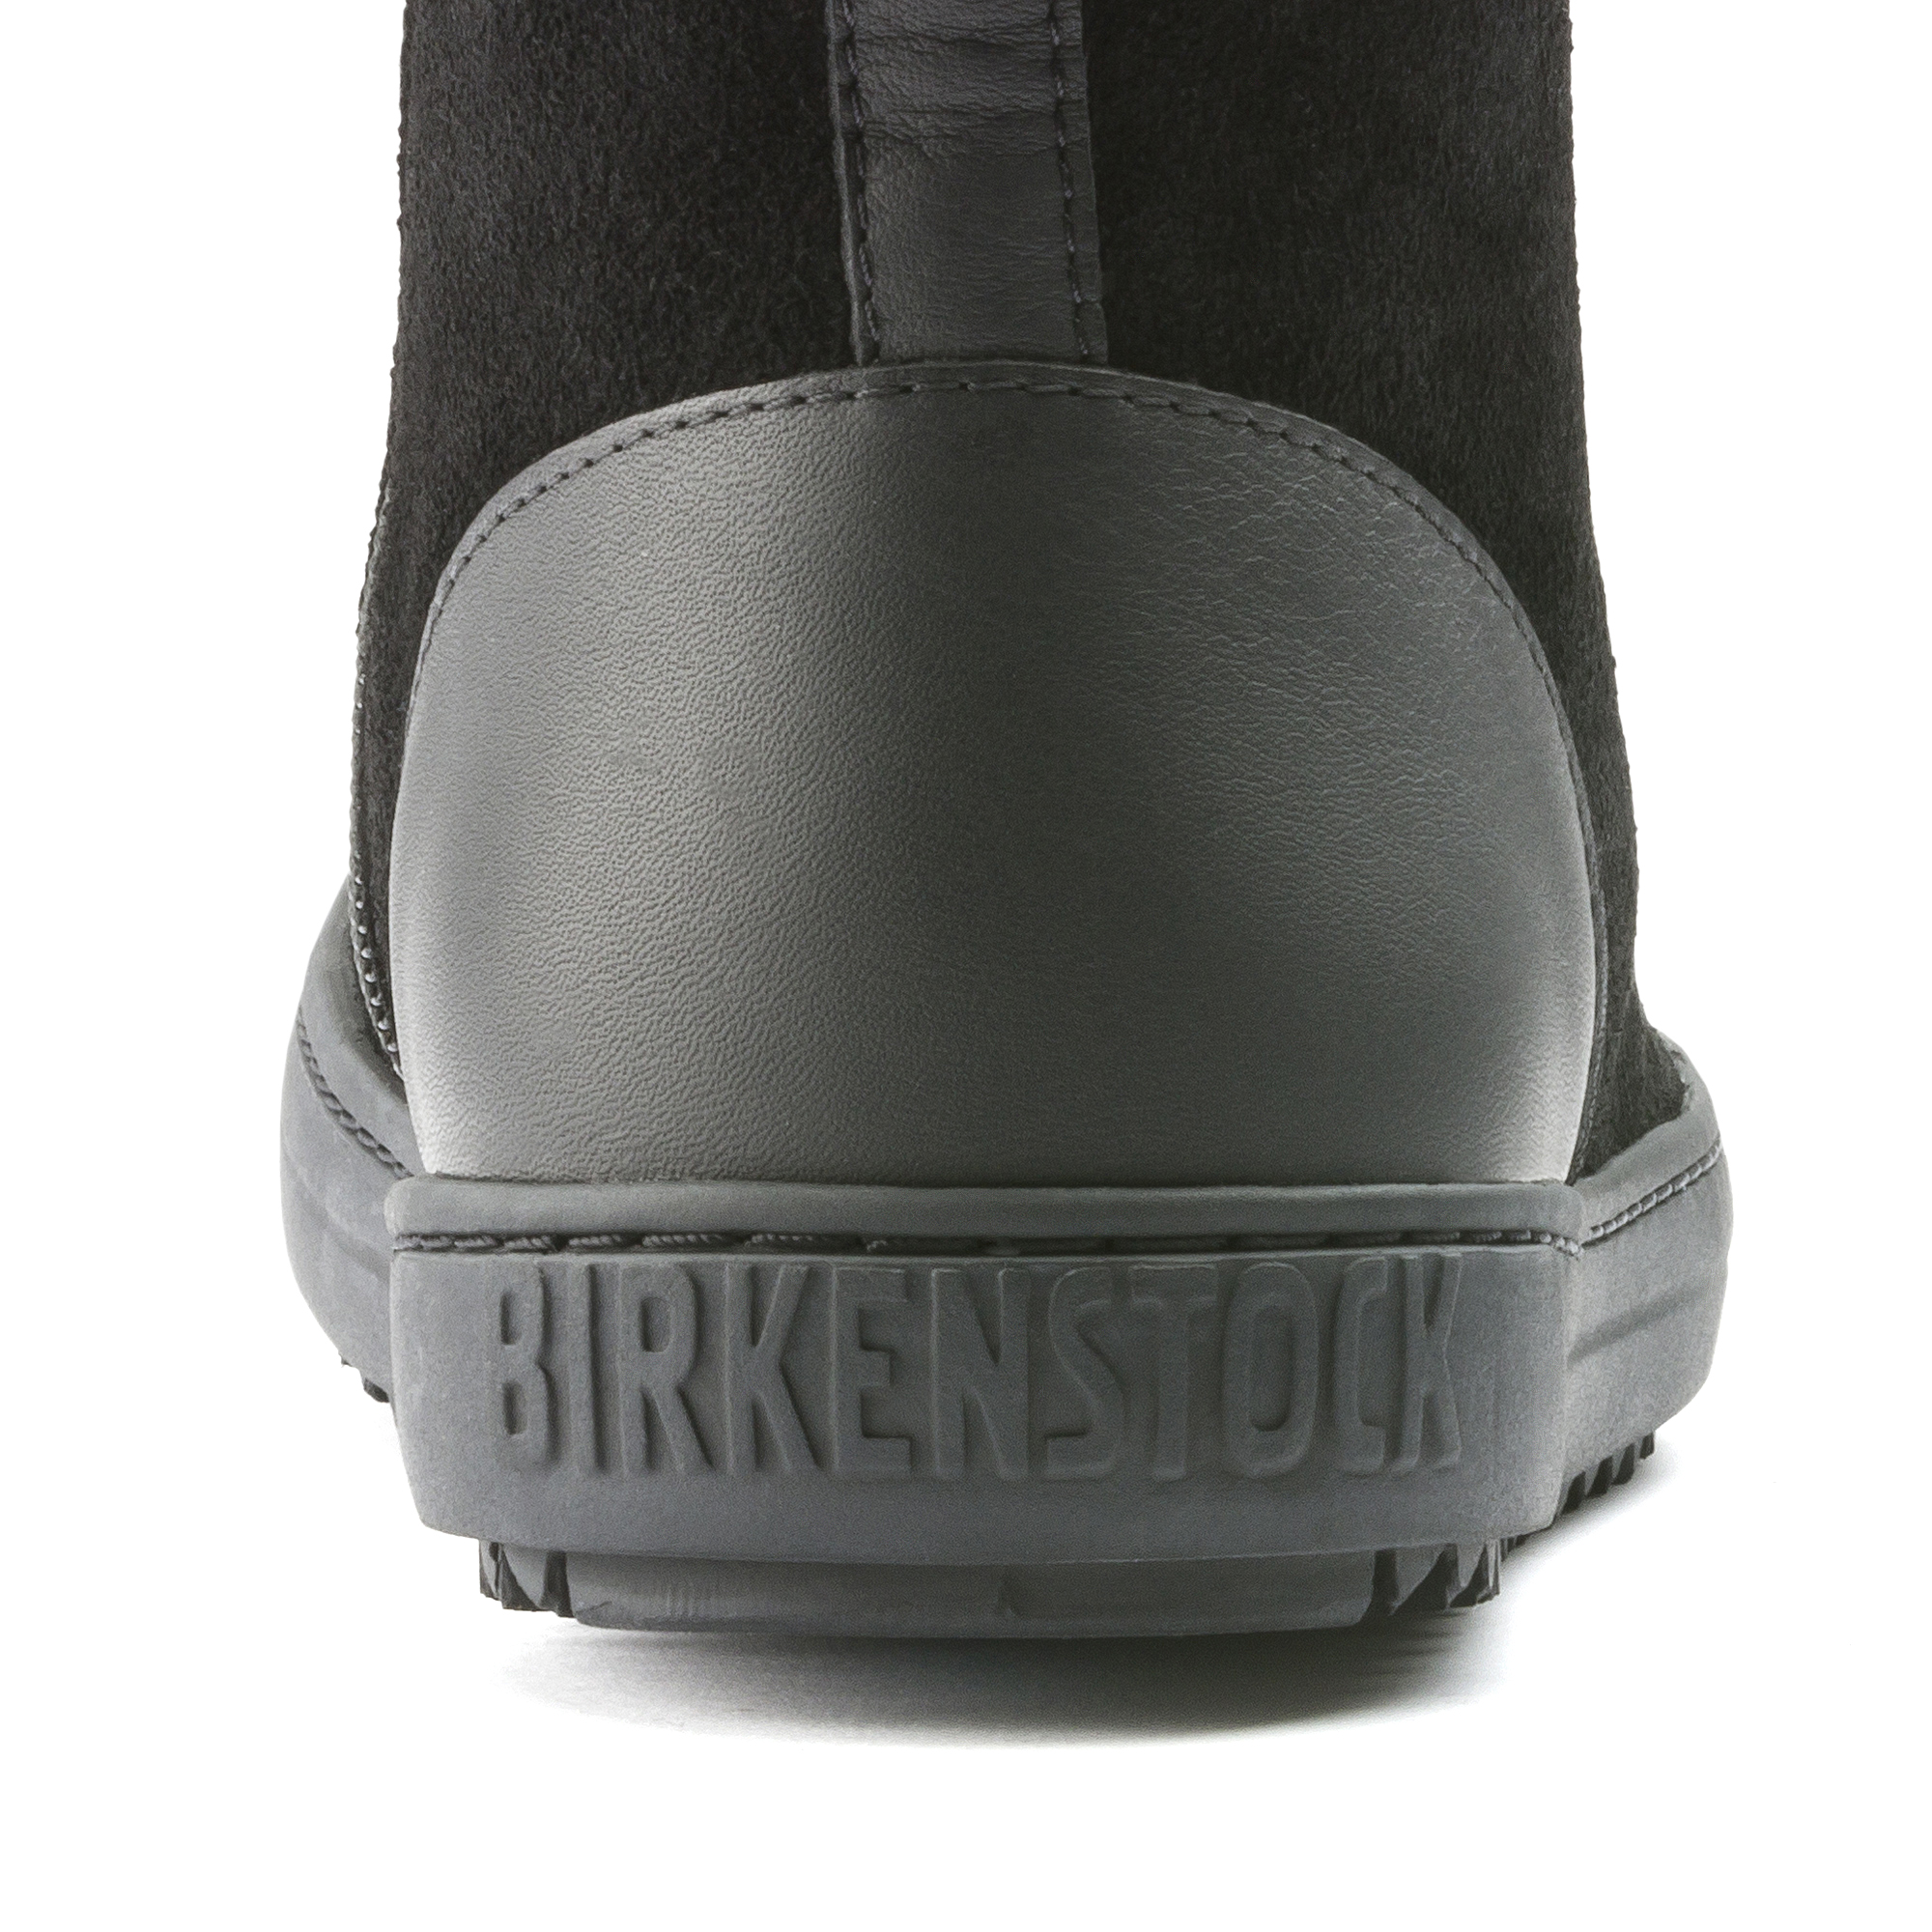 birkenstock myra boots